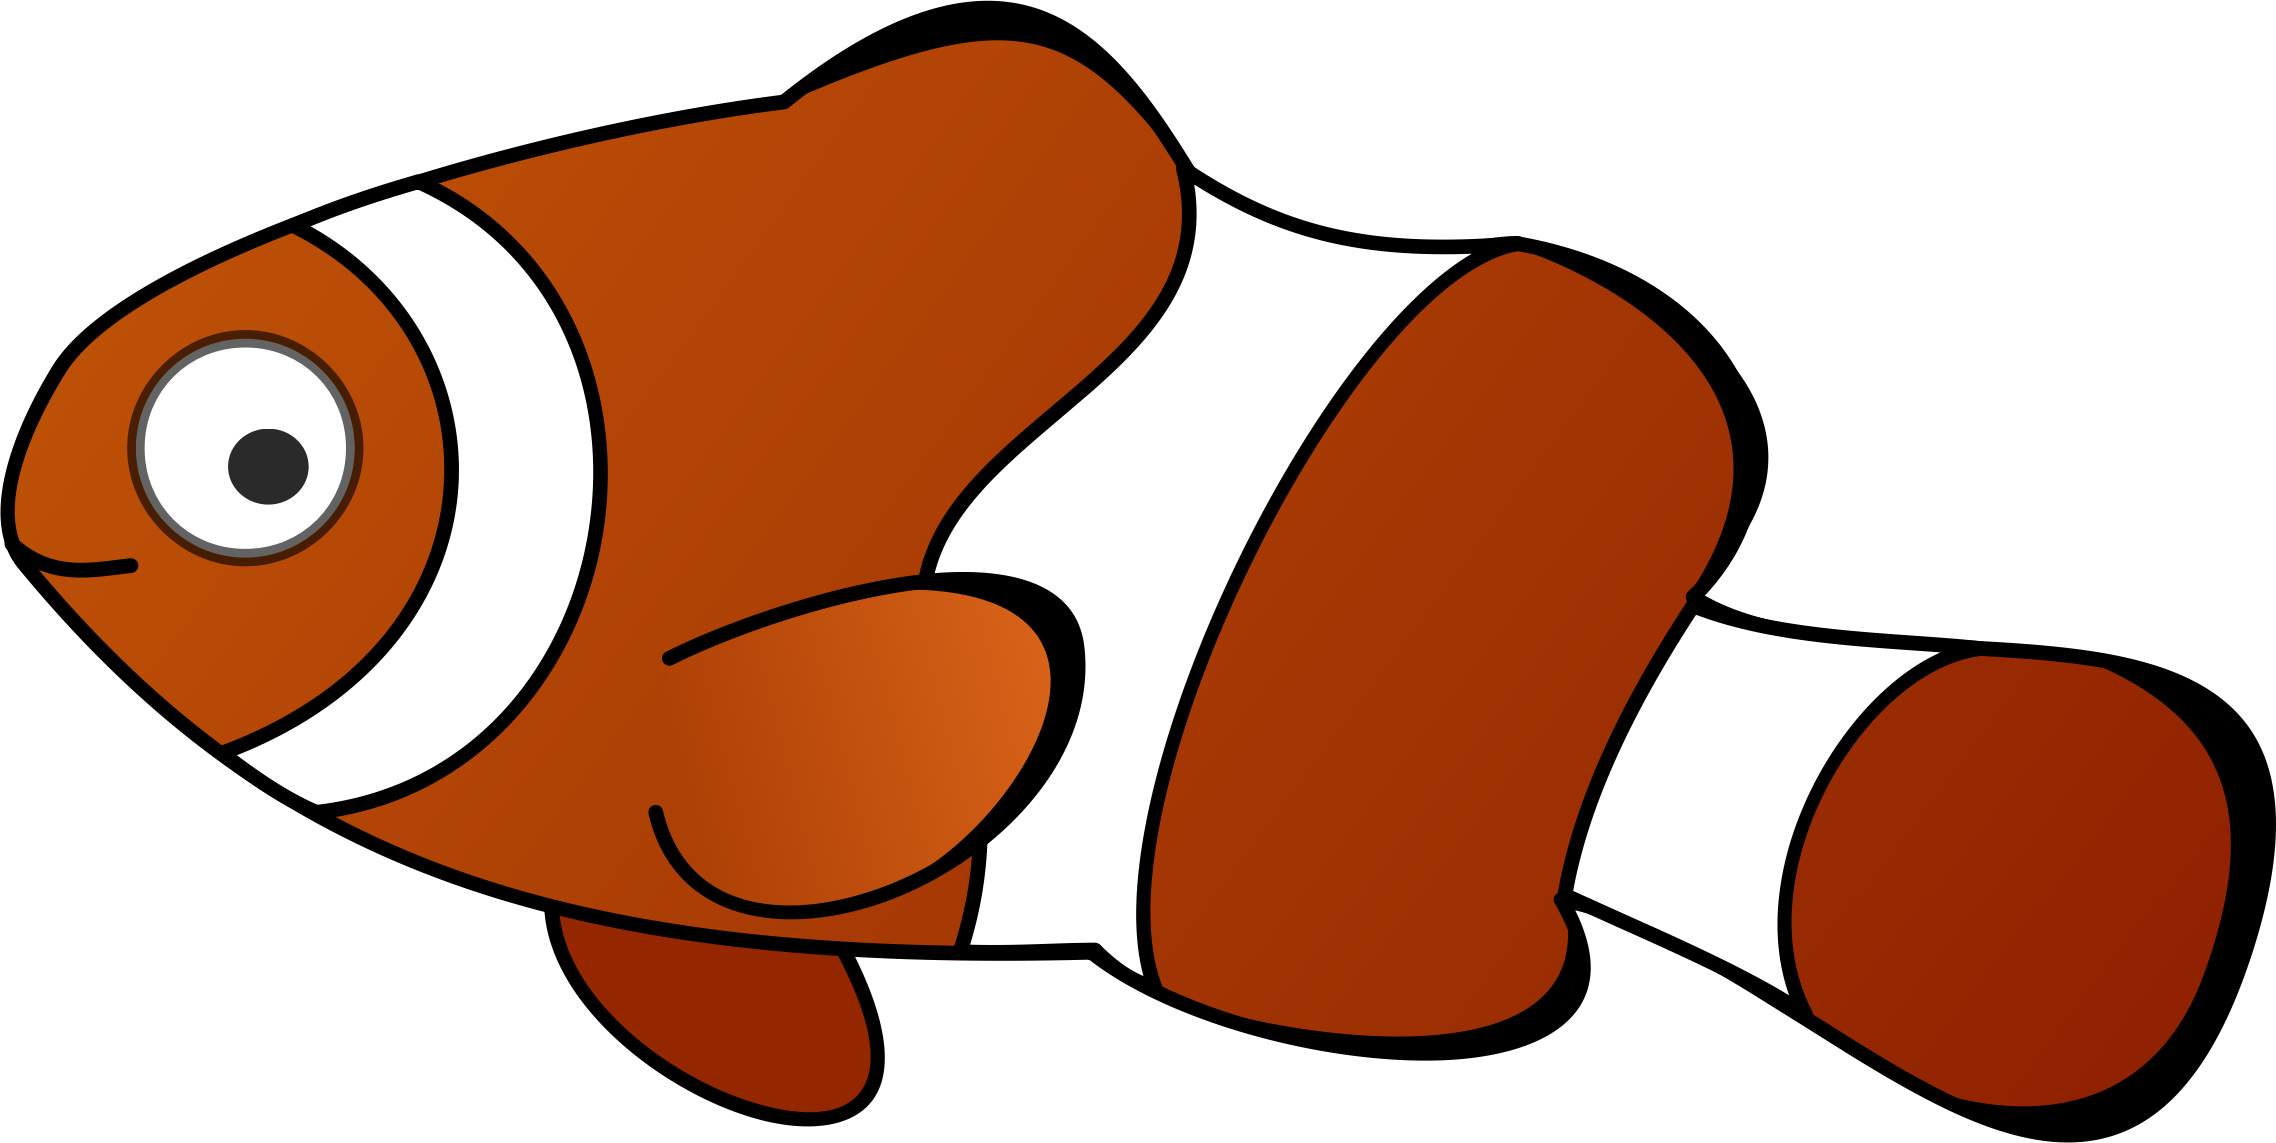 Clownfish Cartoon vector clipart image Free stock photo Public